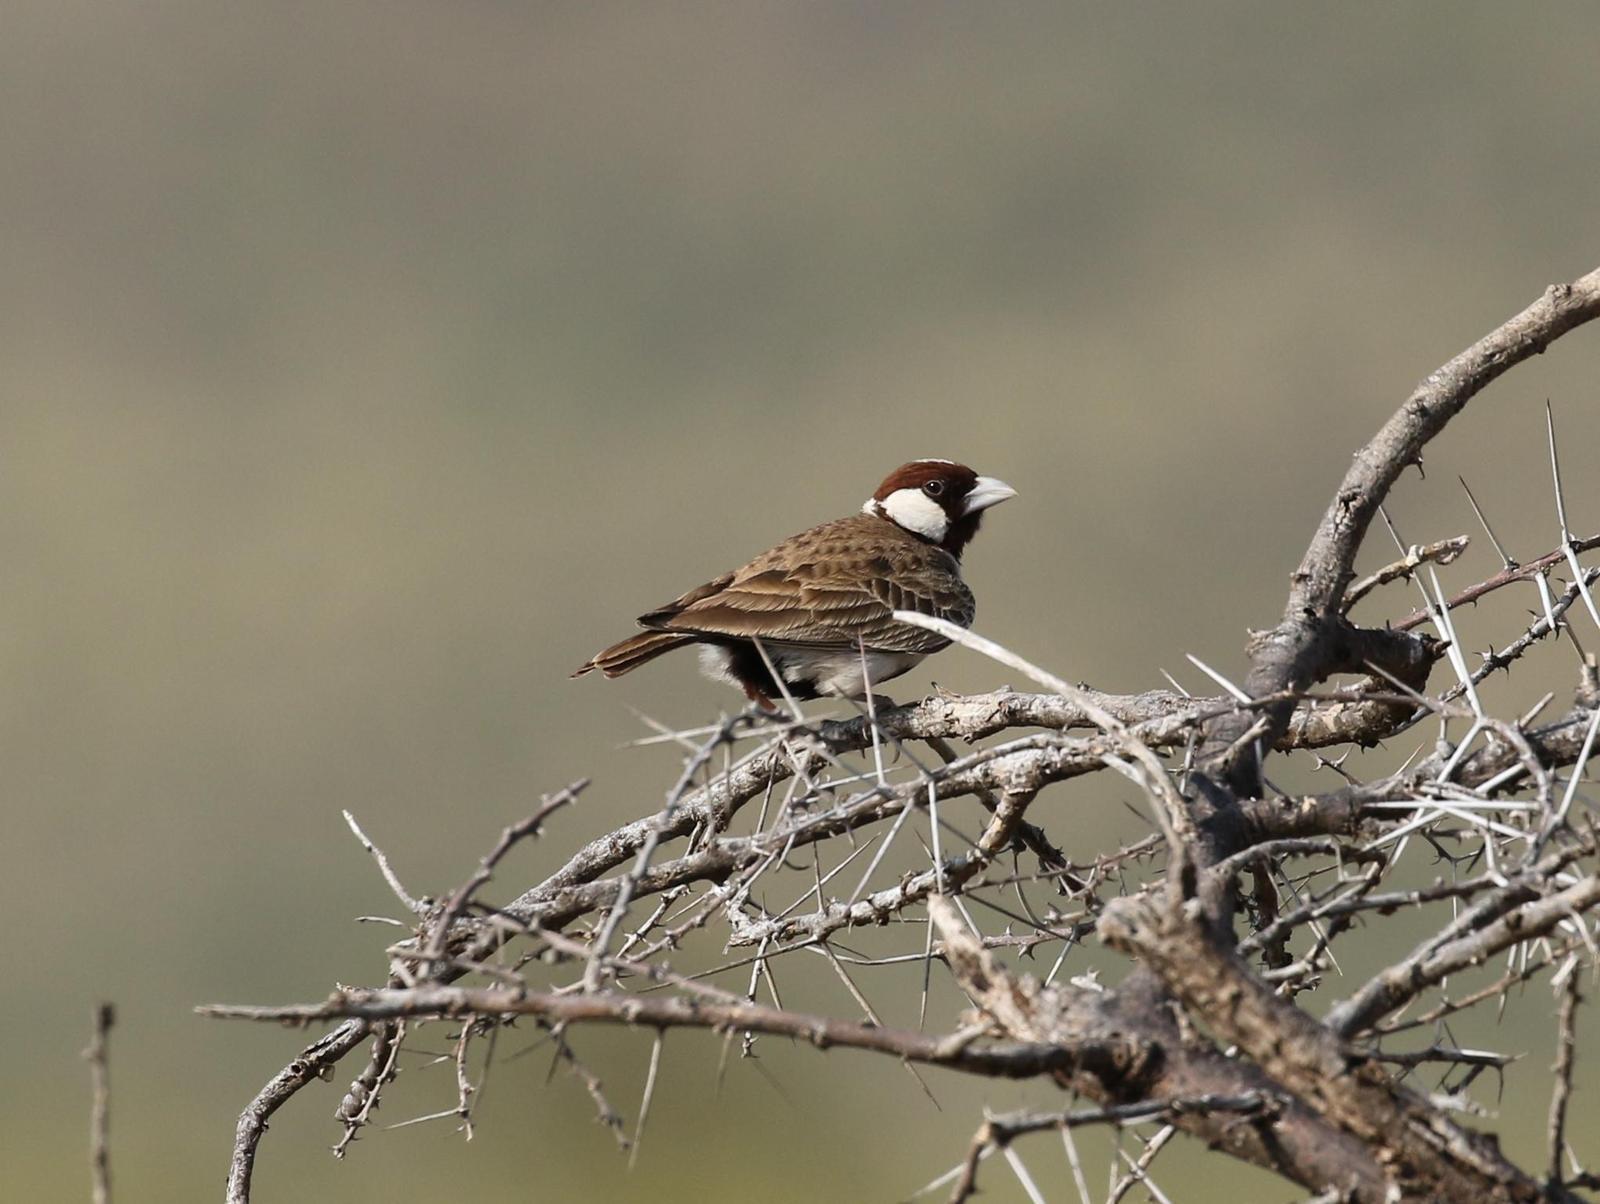 Chestnut-headed Sparrow-Lark Photo by Nate Dias